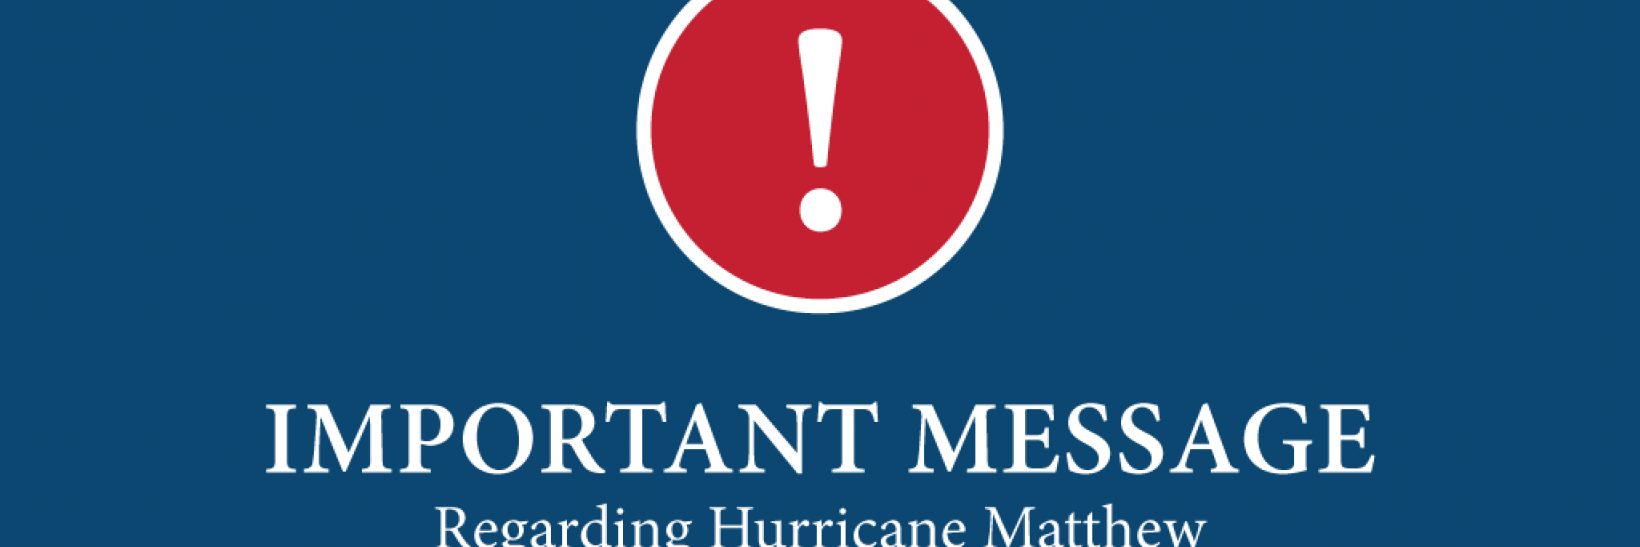 Important Message Regarding Hurricane Matthew